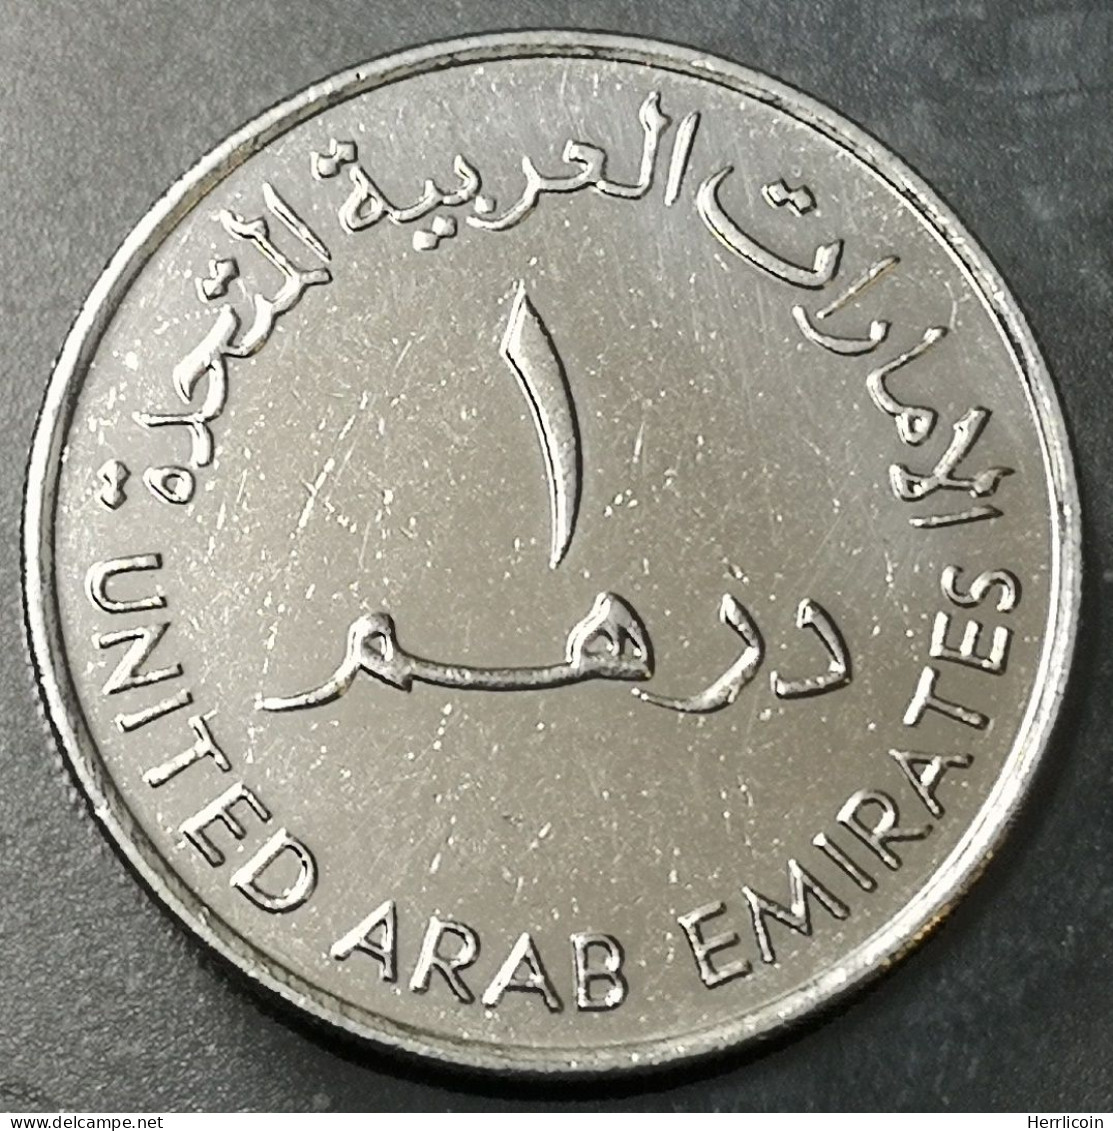 Monnaie Emirats Arabes Unis - 1415 (1995)  ١٤١٥ - ١٩٩٥- 1 Dirham Sultan Zayed Bin petit Module - Emirats Arabes Unis